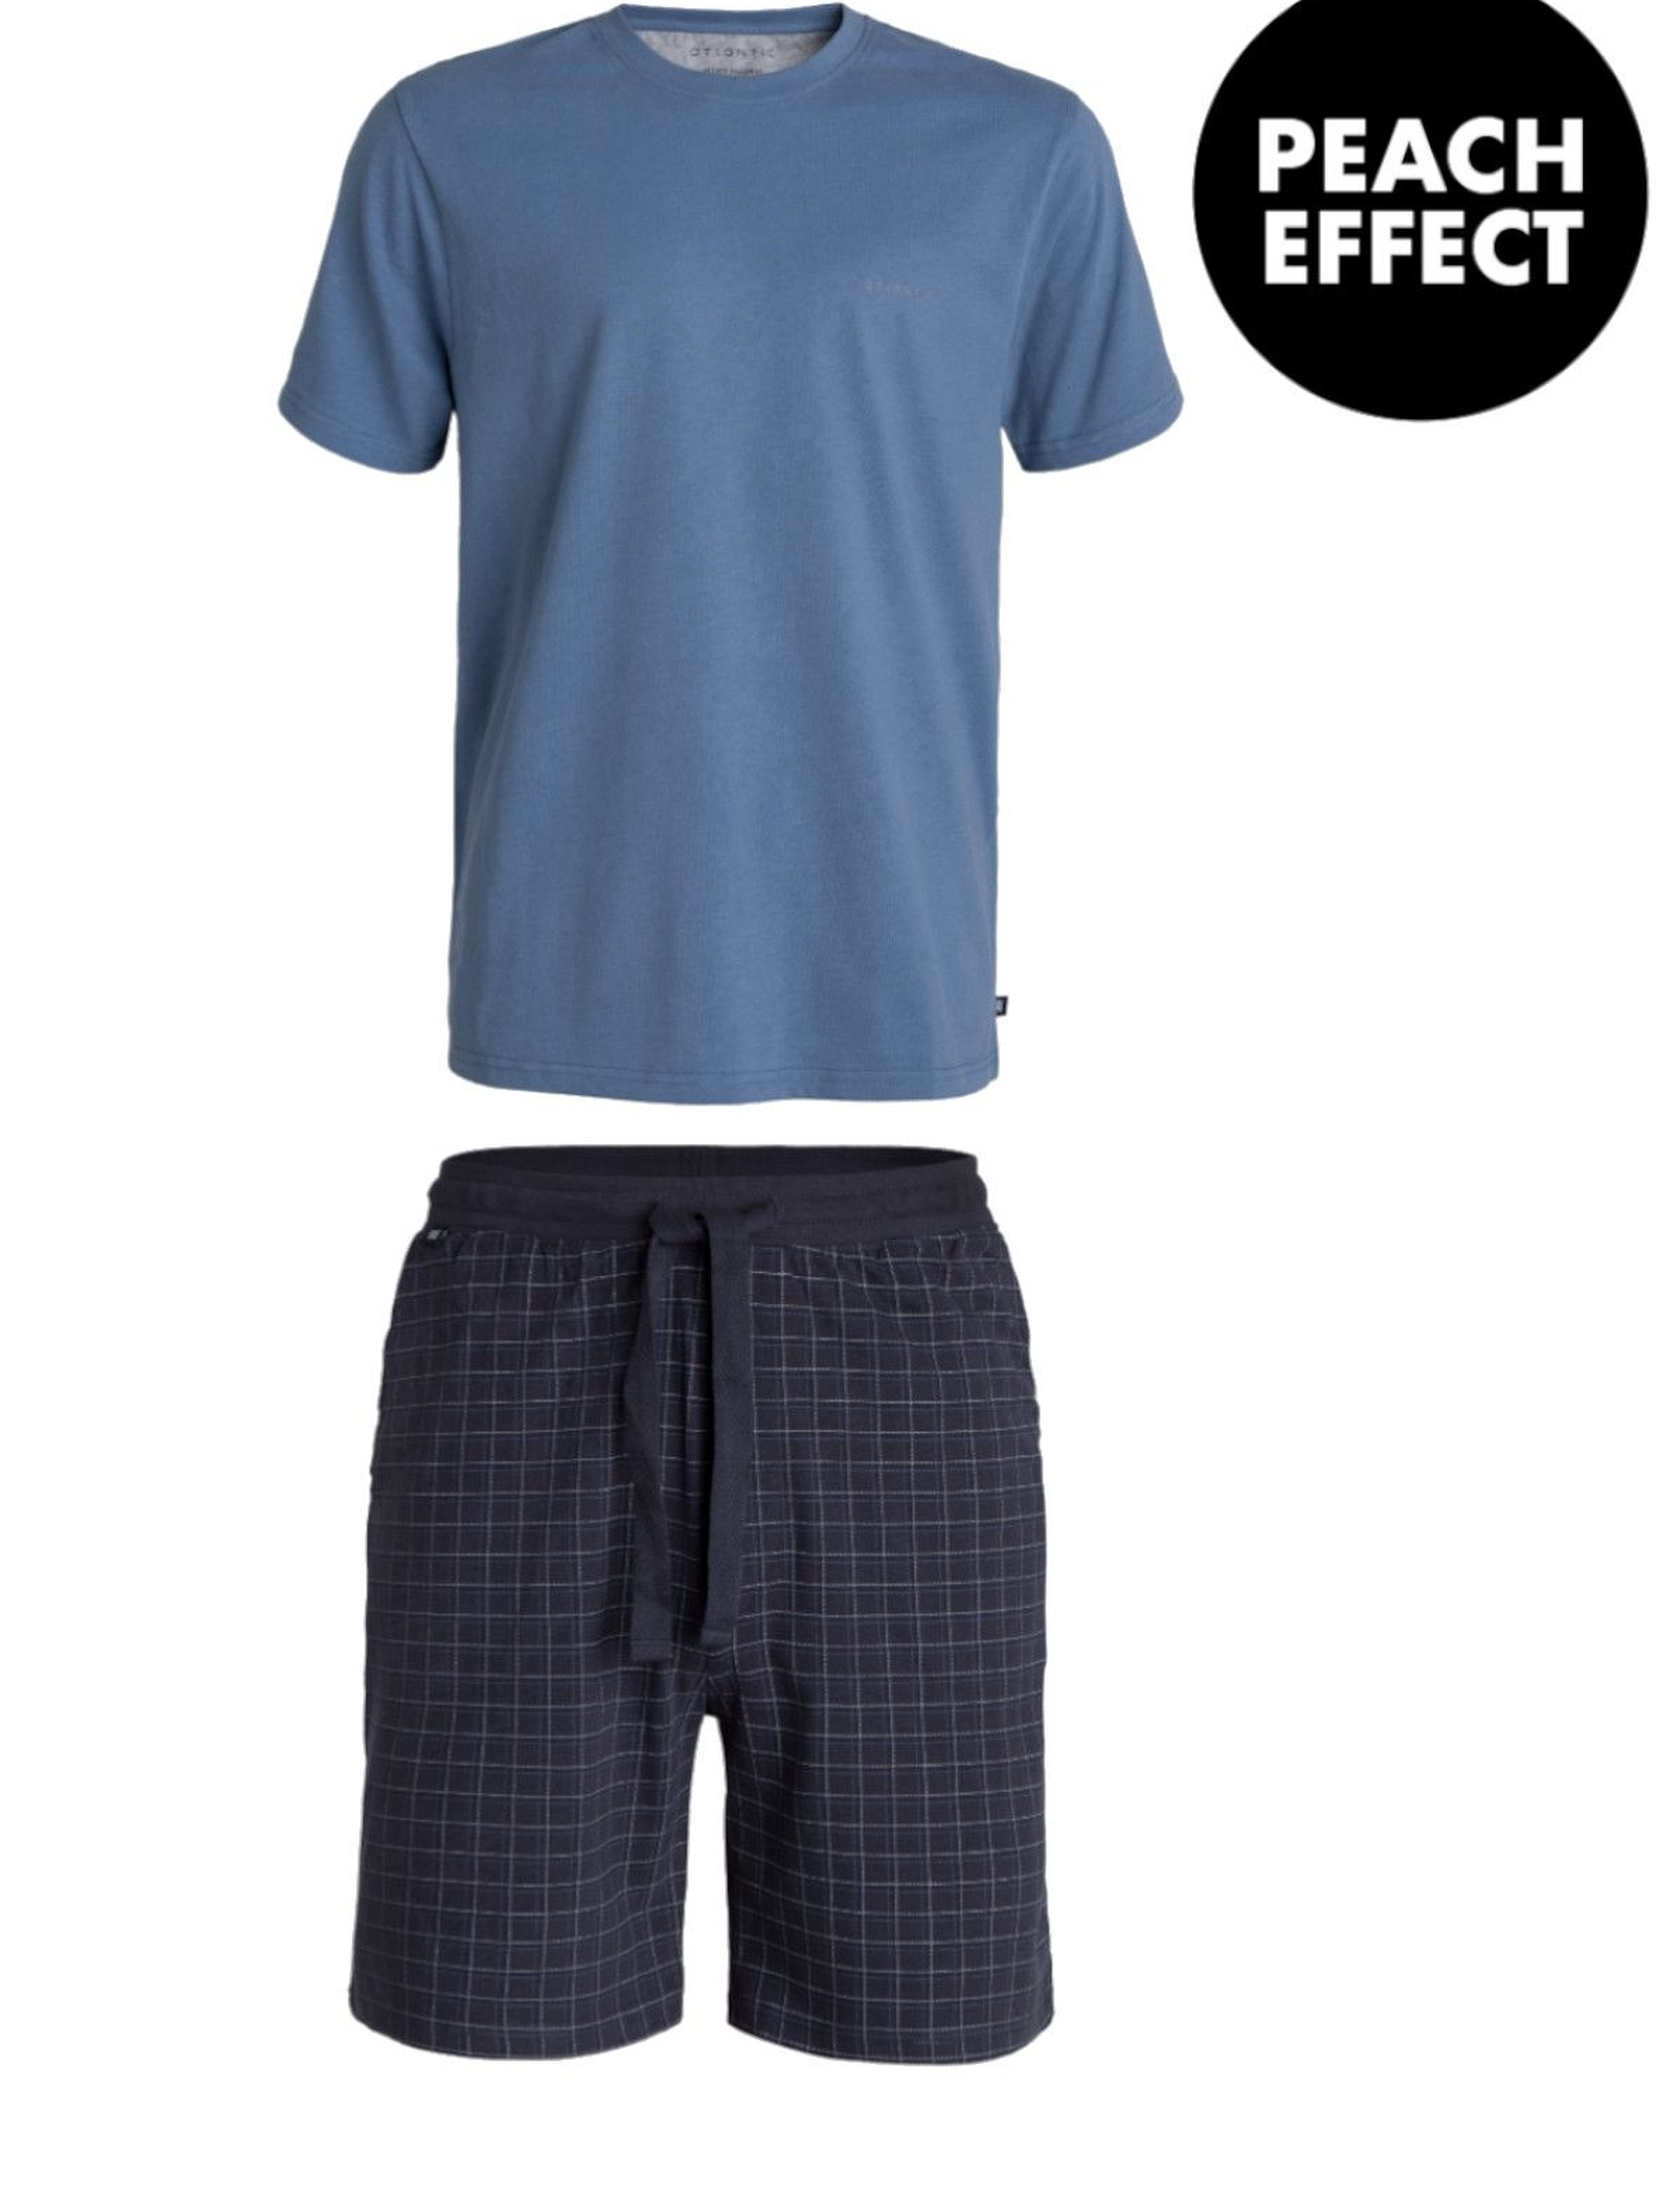 Piżama męska szorty + t-shirt Atlantic